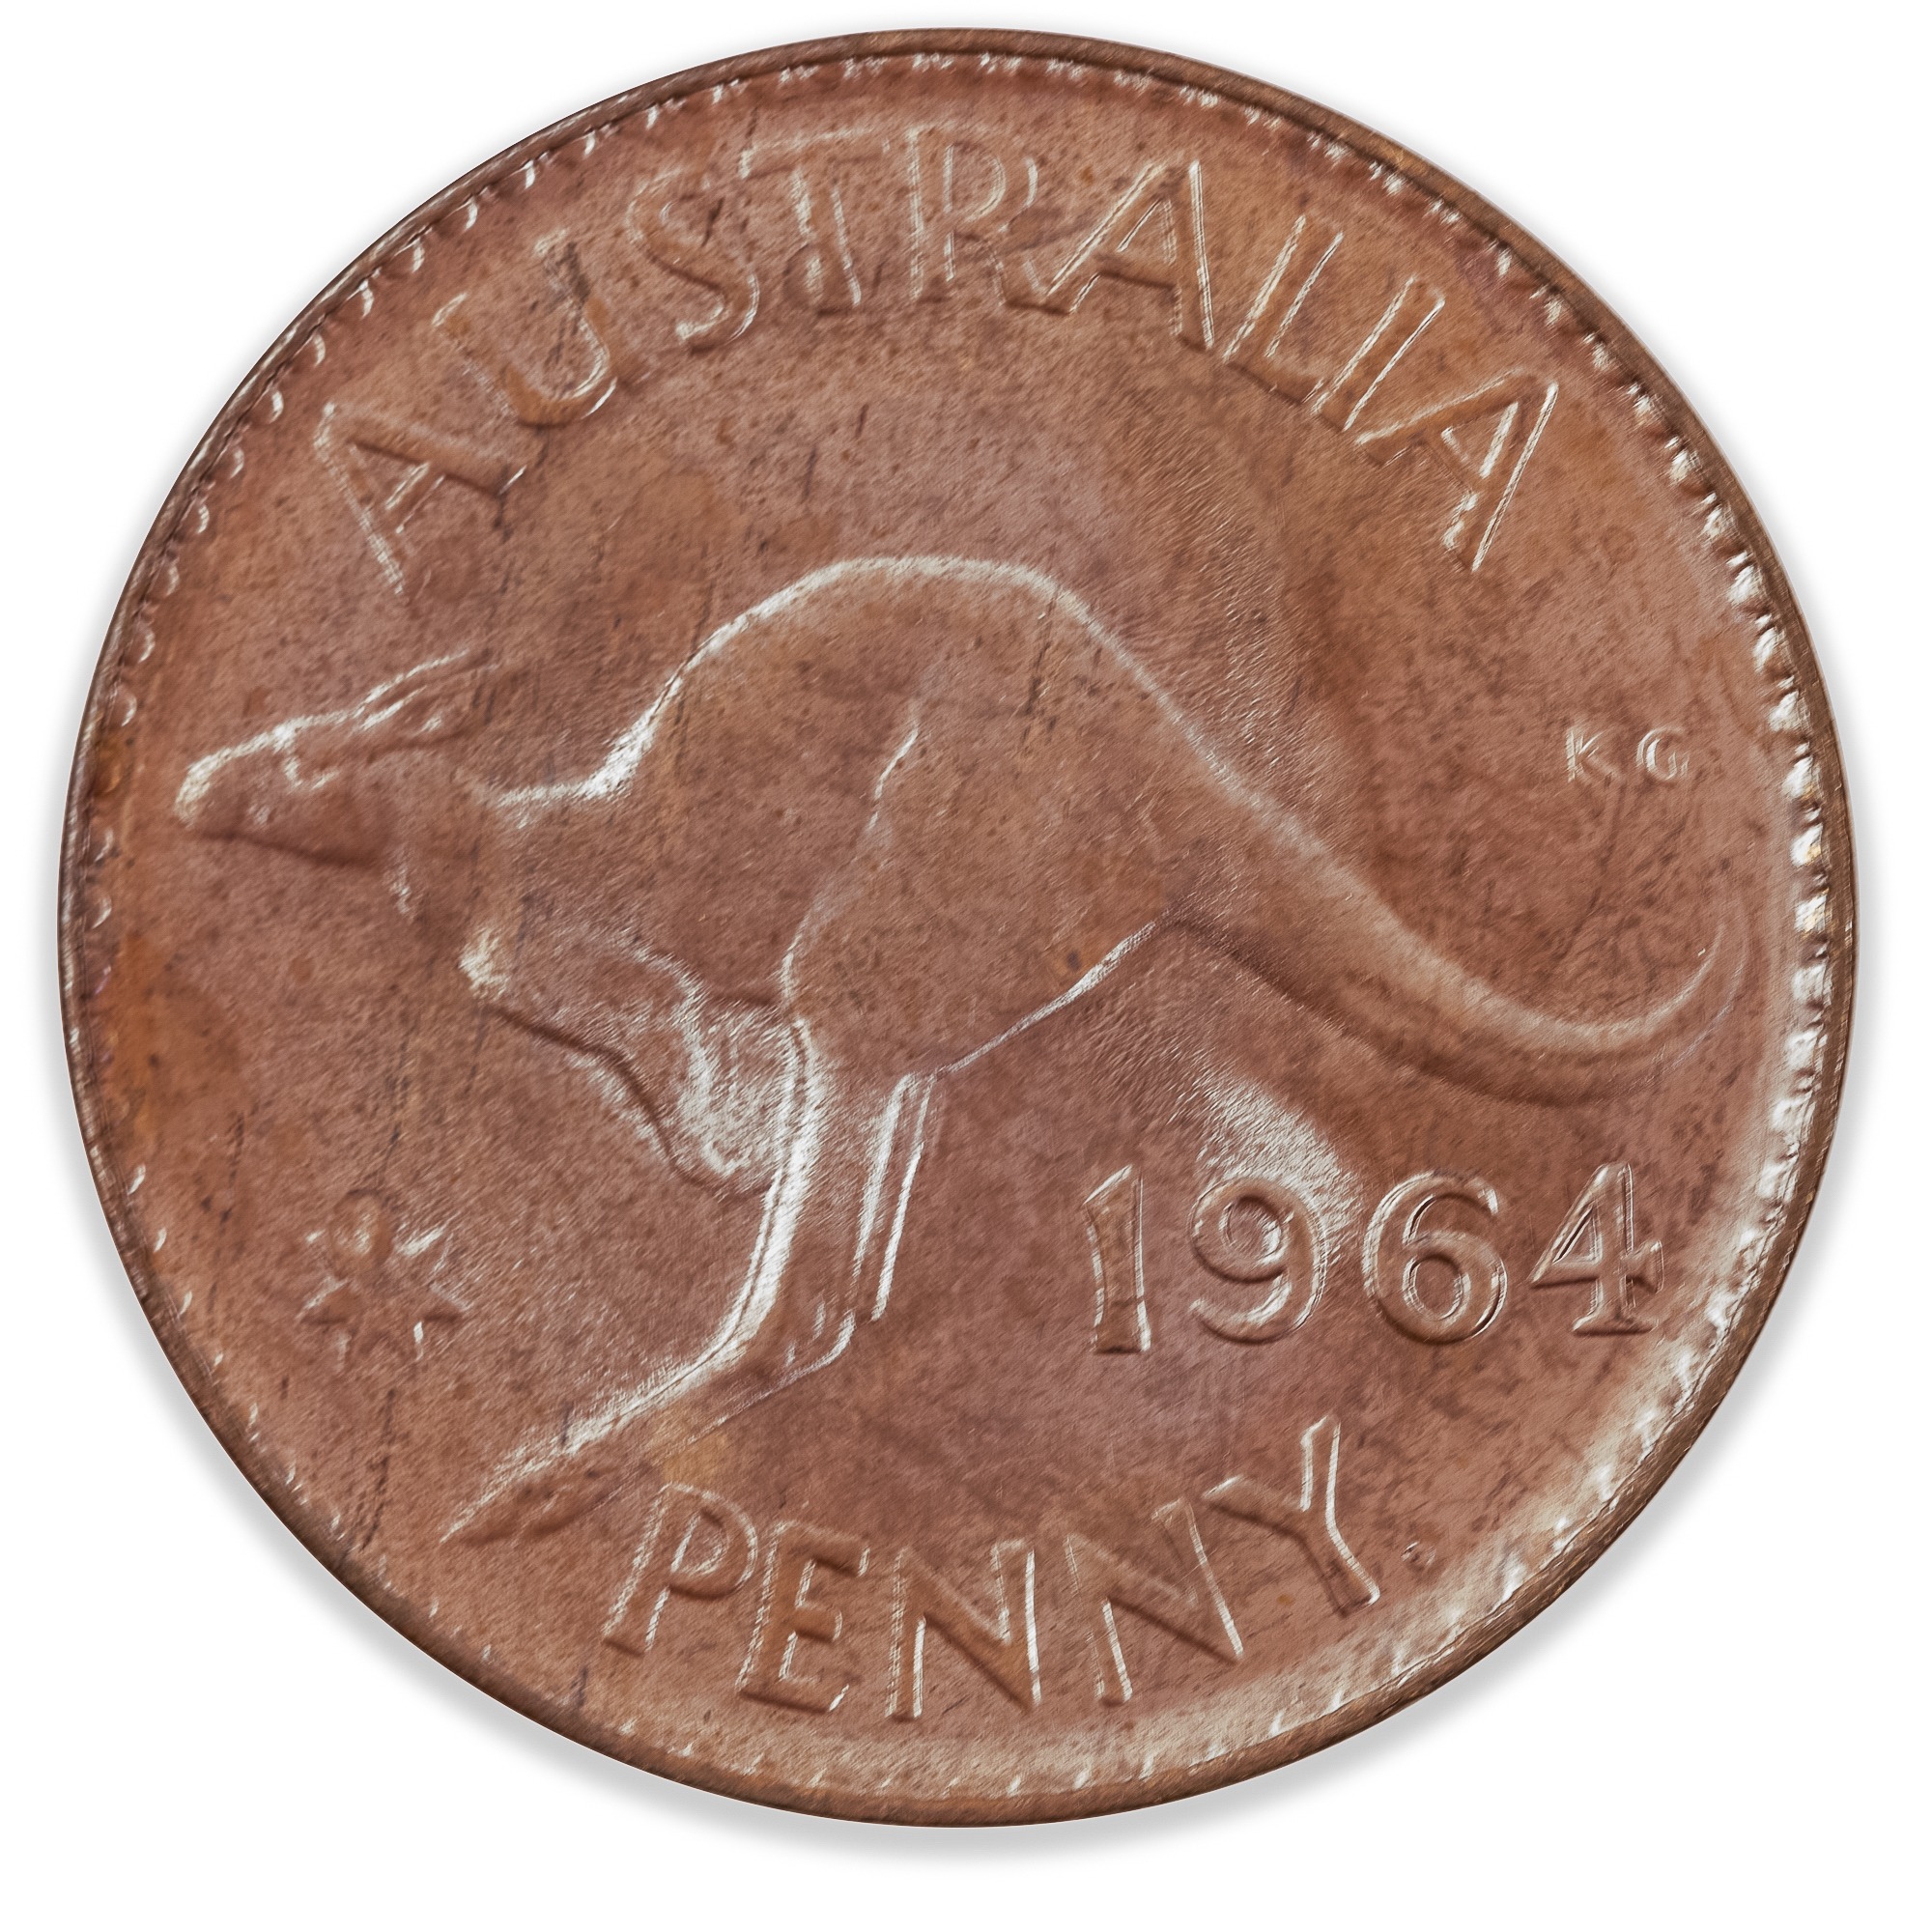 1964 Australian Penny Choice Uncirculated